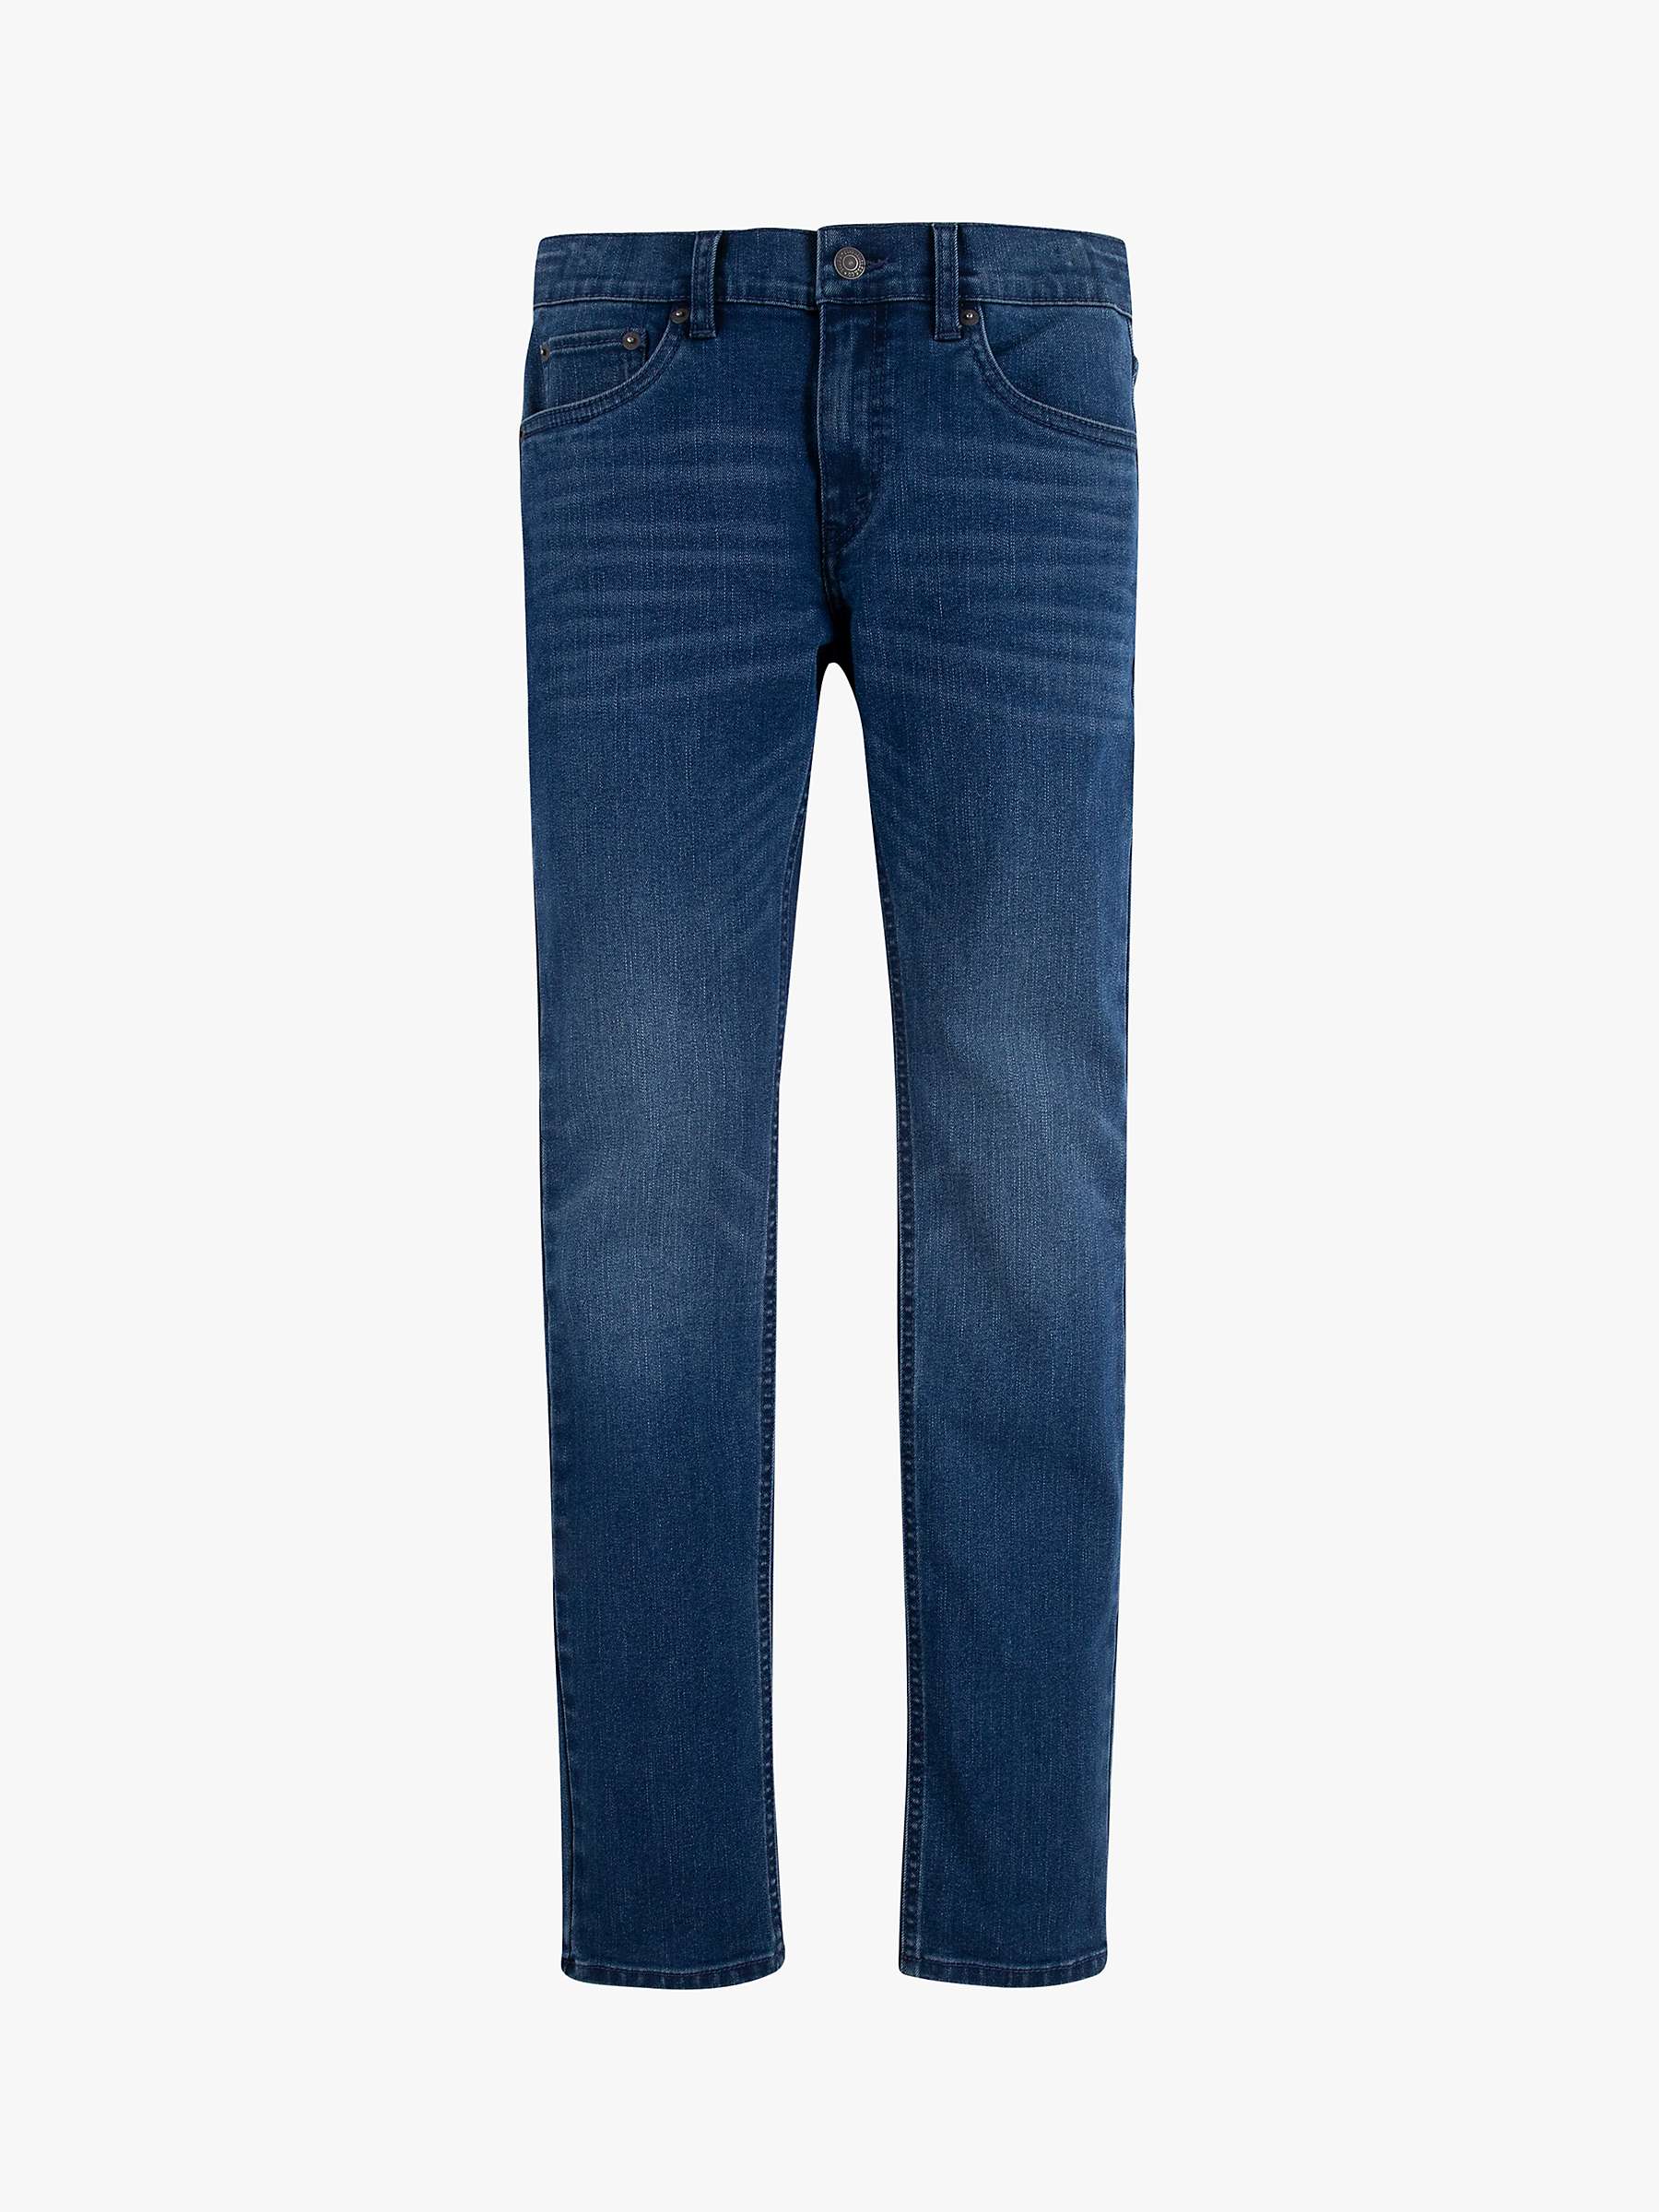 Buy Levi Boys' 510 Skinny Fit Jeans Online at johnlewis.com